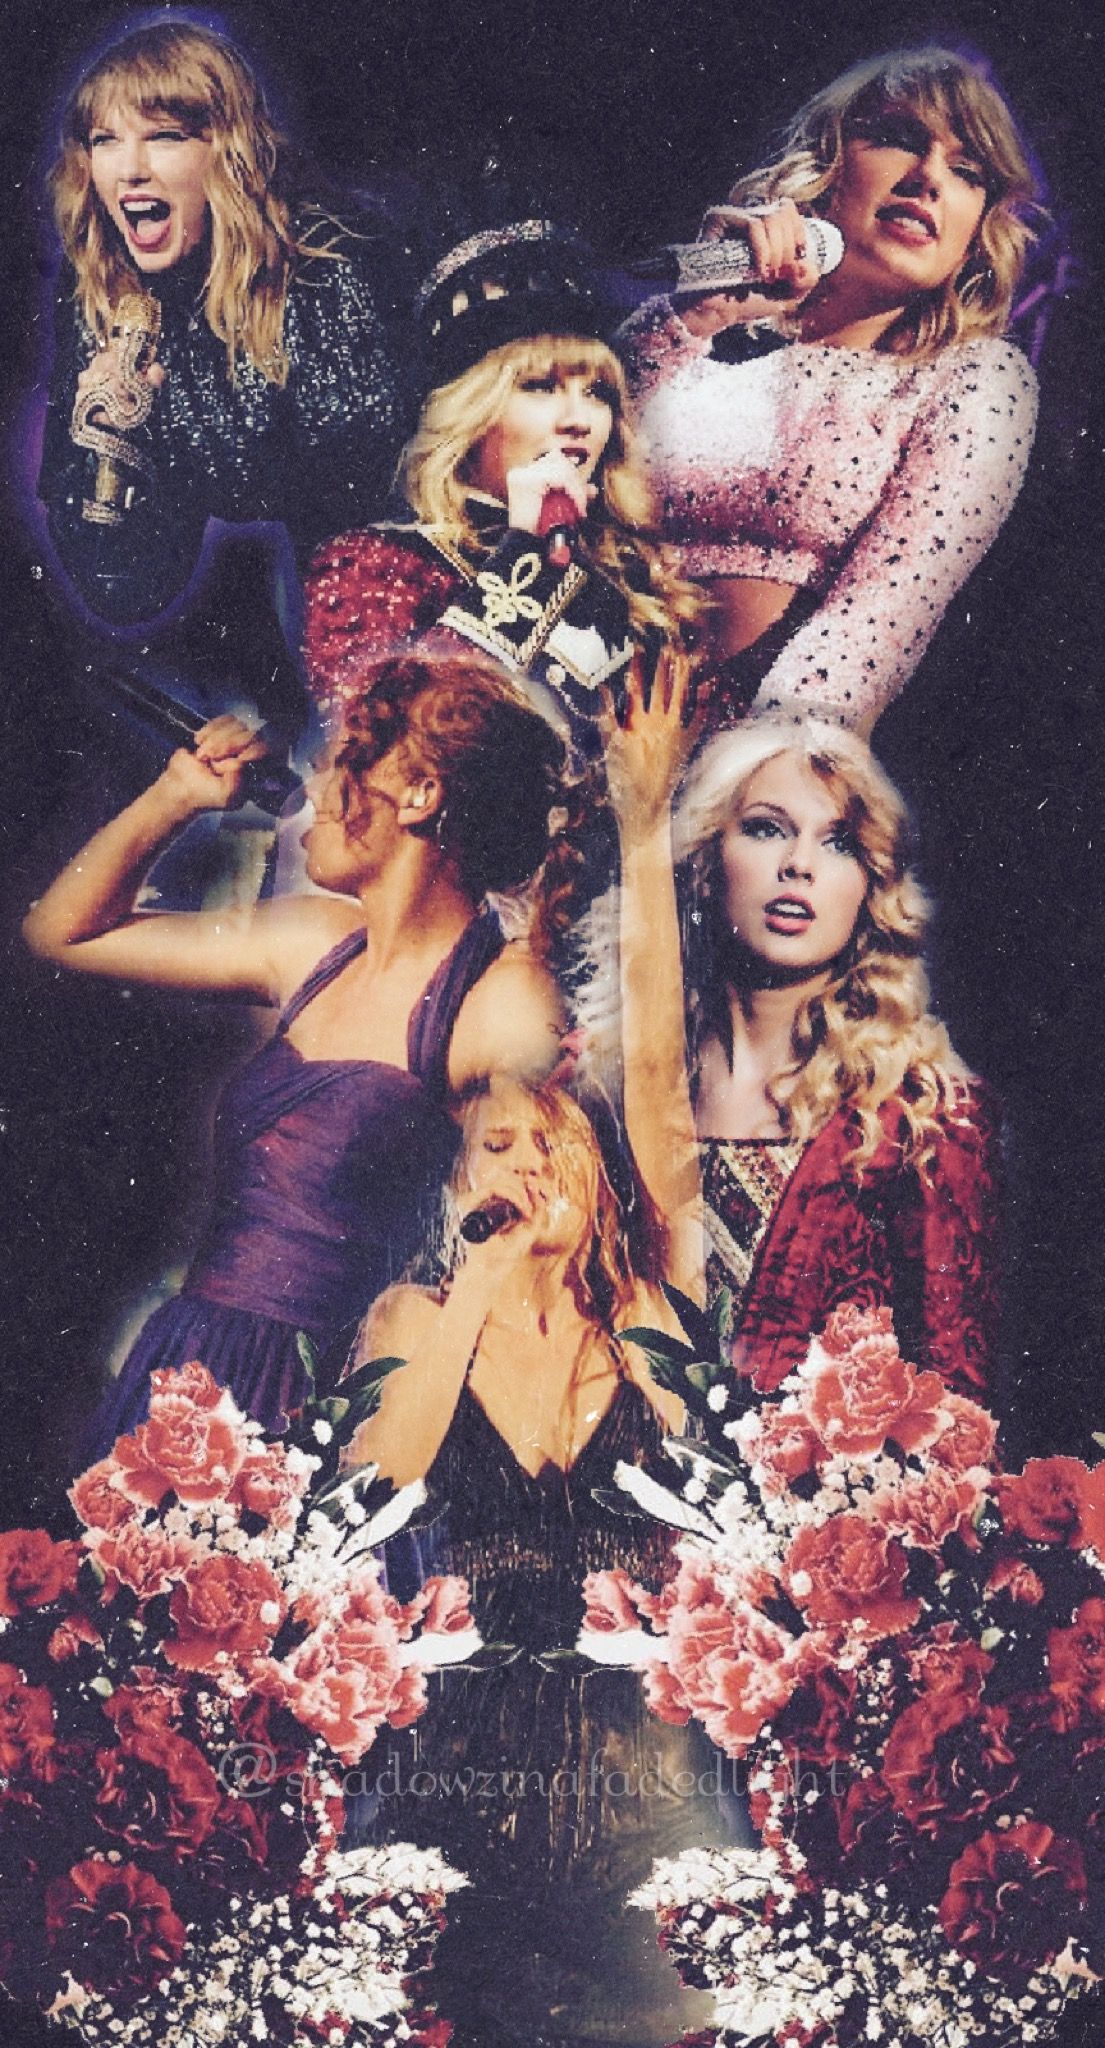 Taylor Swift performances throughout the eras. Taylor swift picture, Taylor swift fan, Taylor swift wallpaper